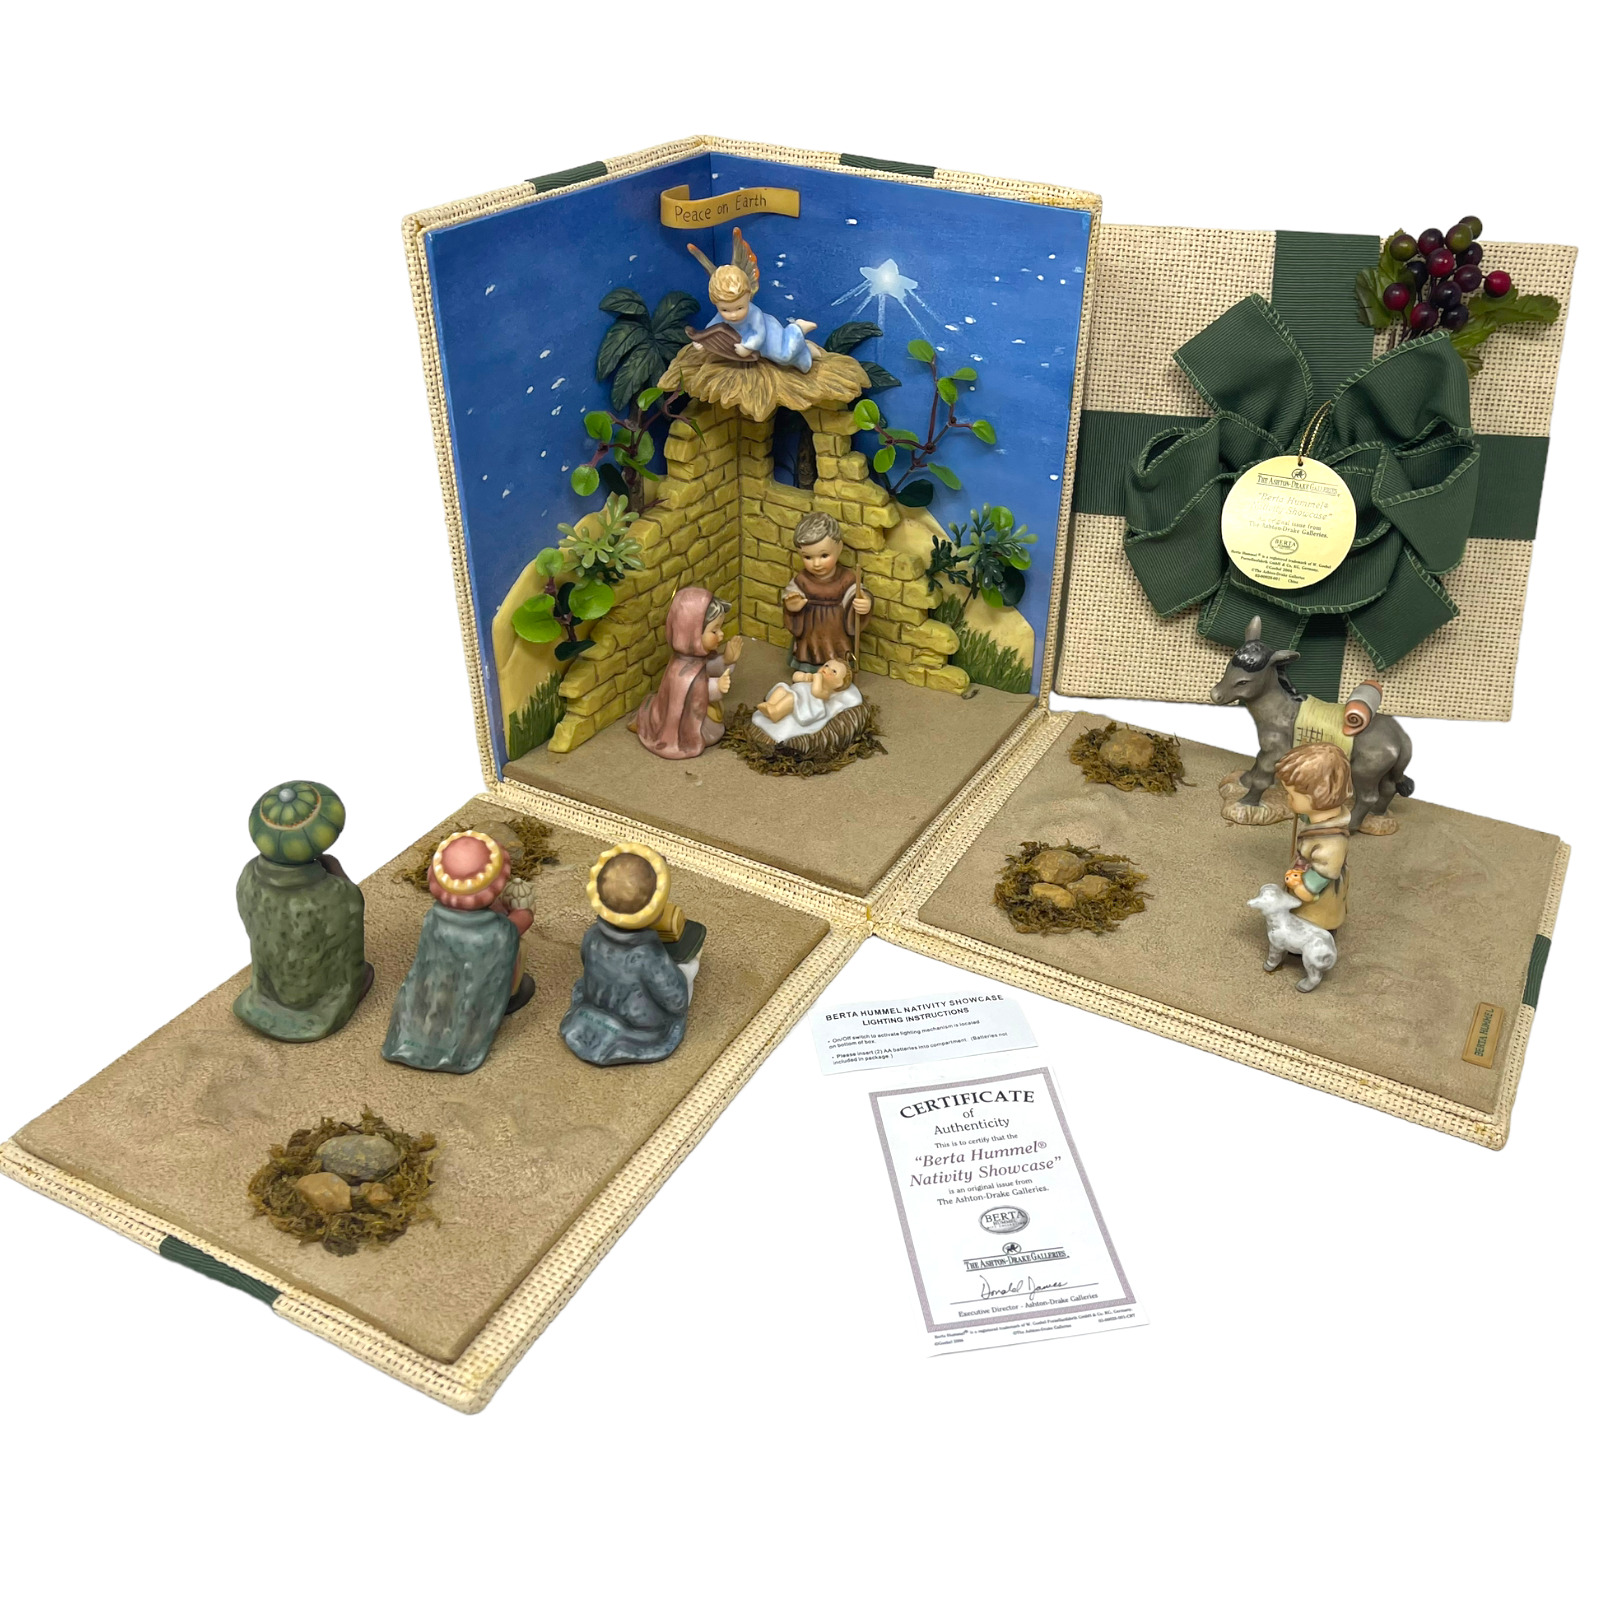 Berta Hummel Nativity Showcase Gift Box (Ashton-Drake Galleries) 2004 Rare